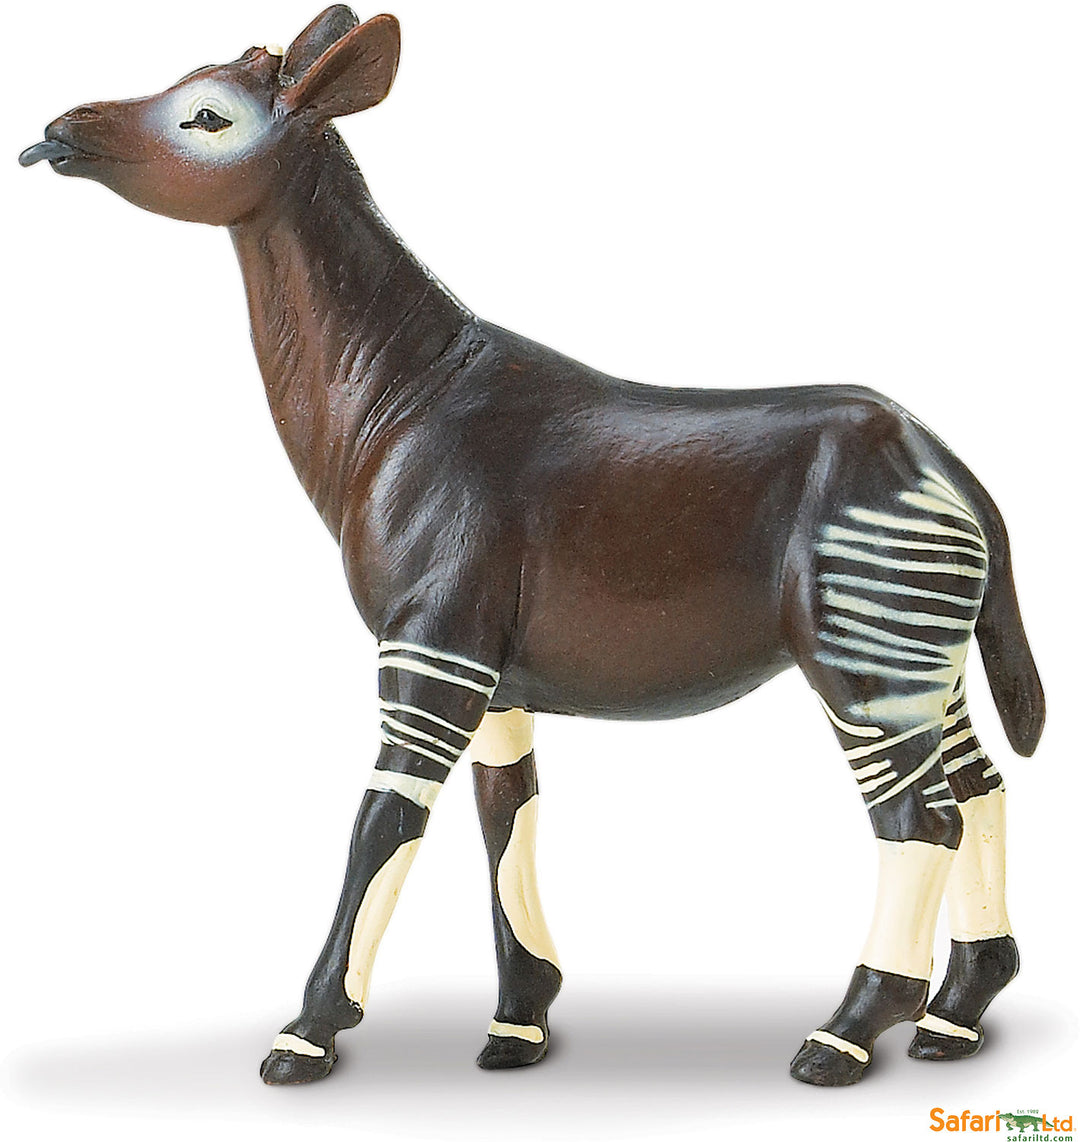 Safari Wild Okapi